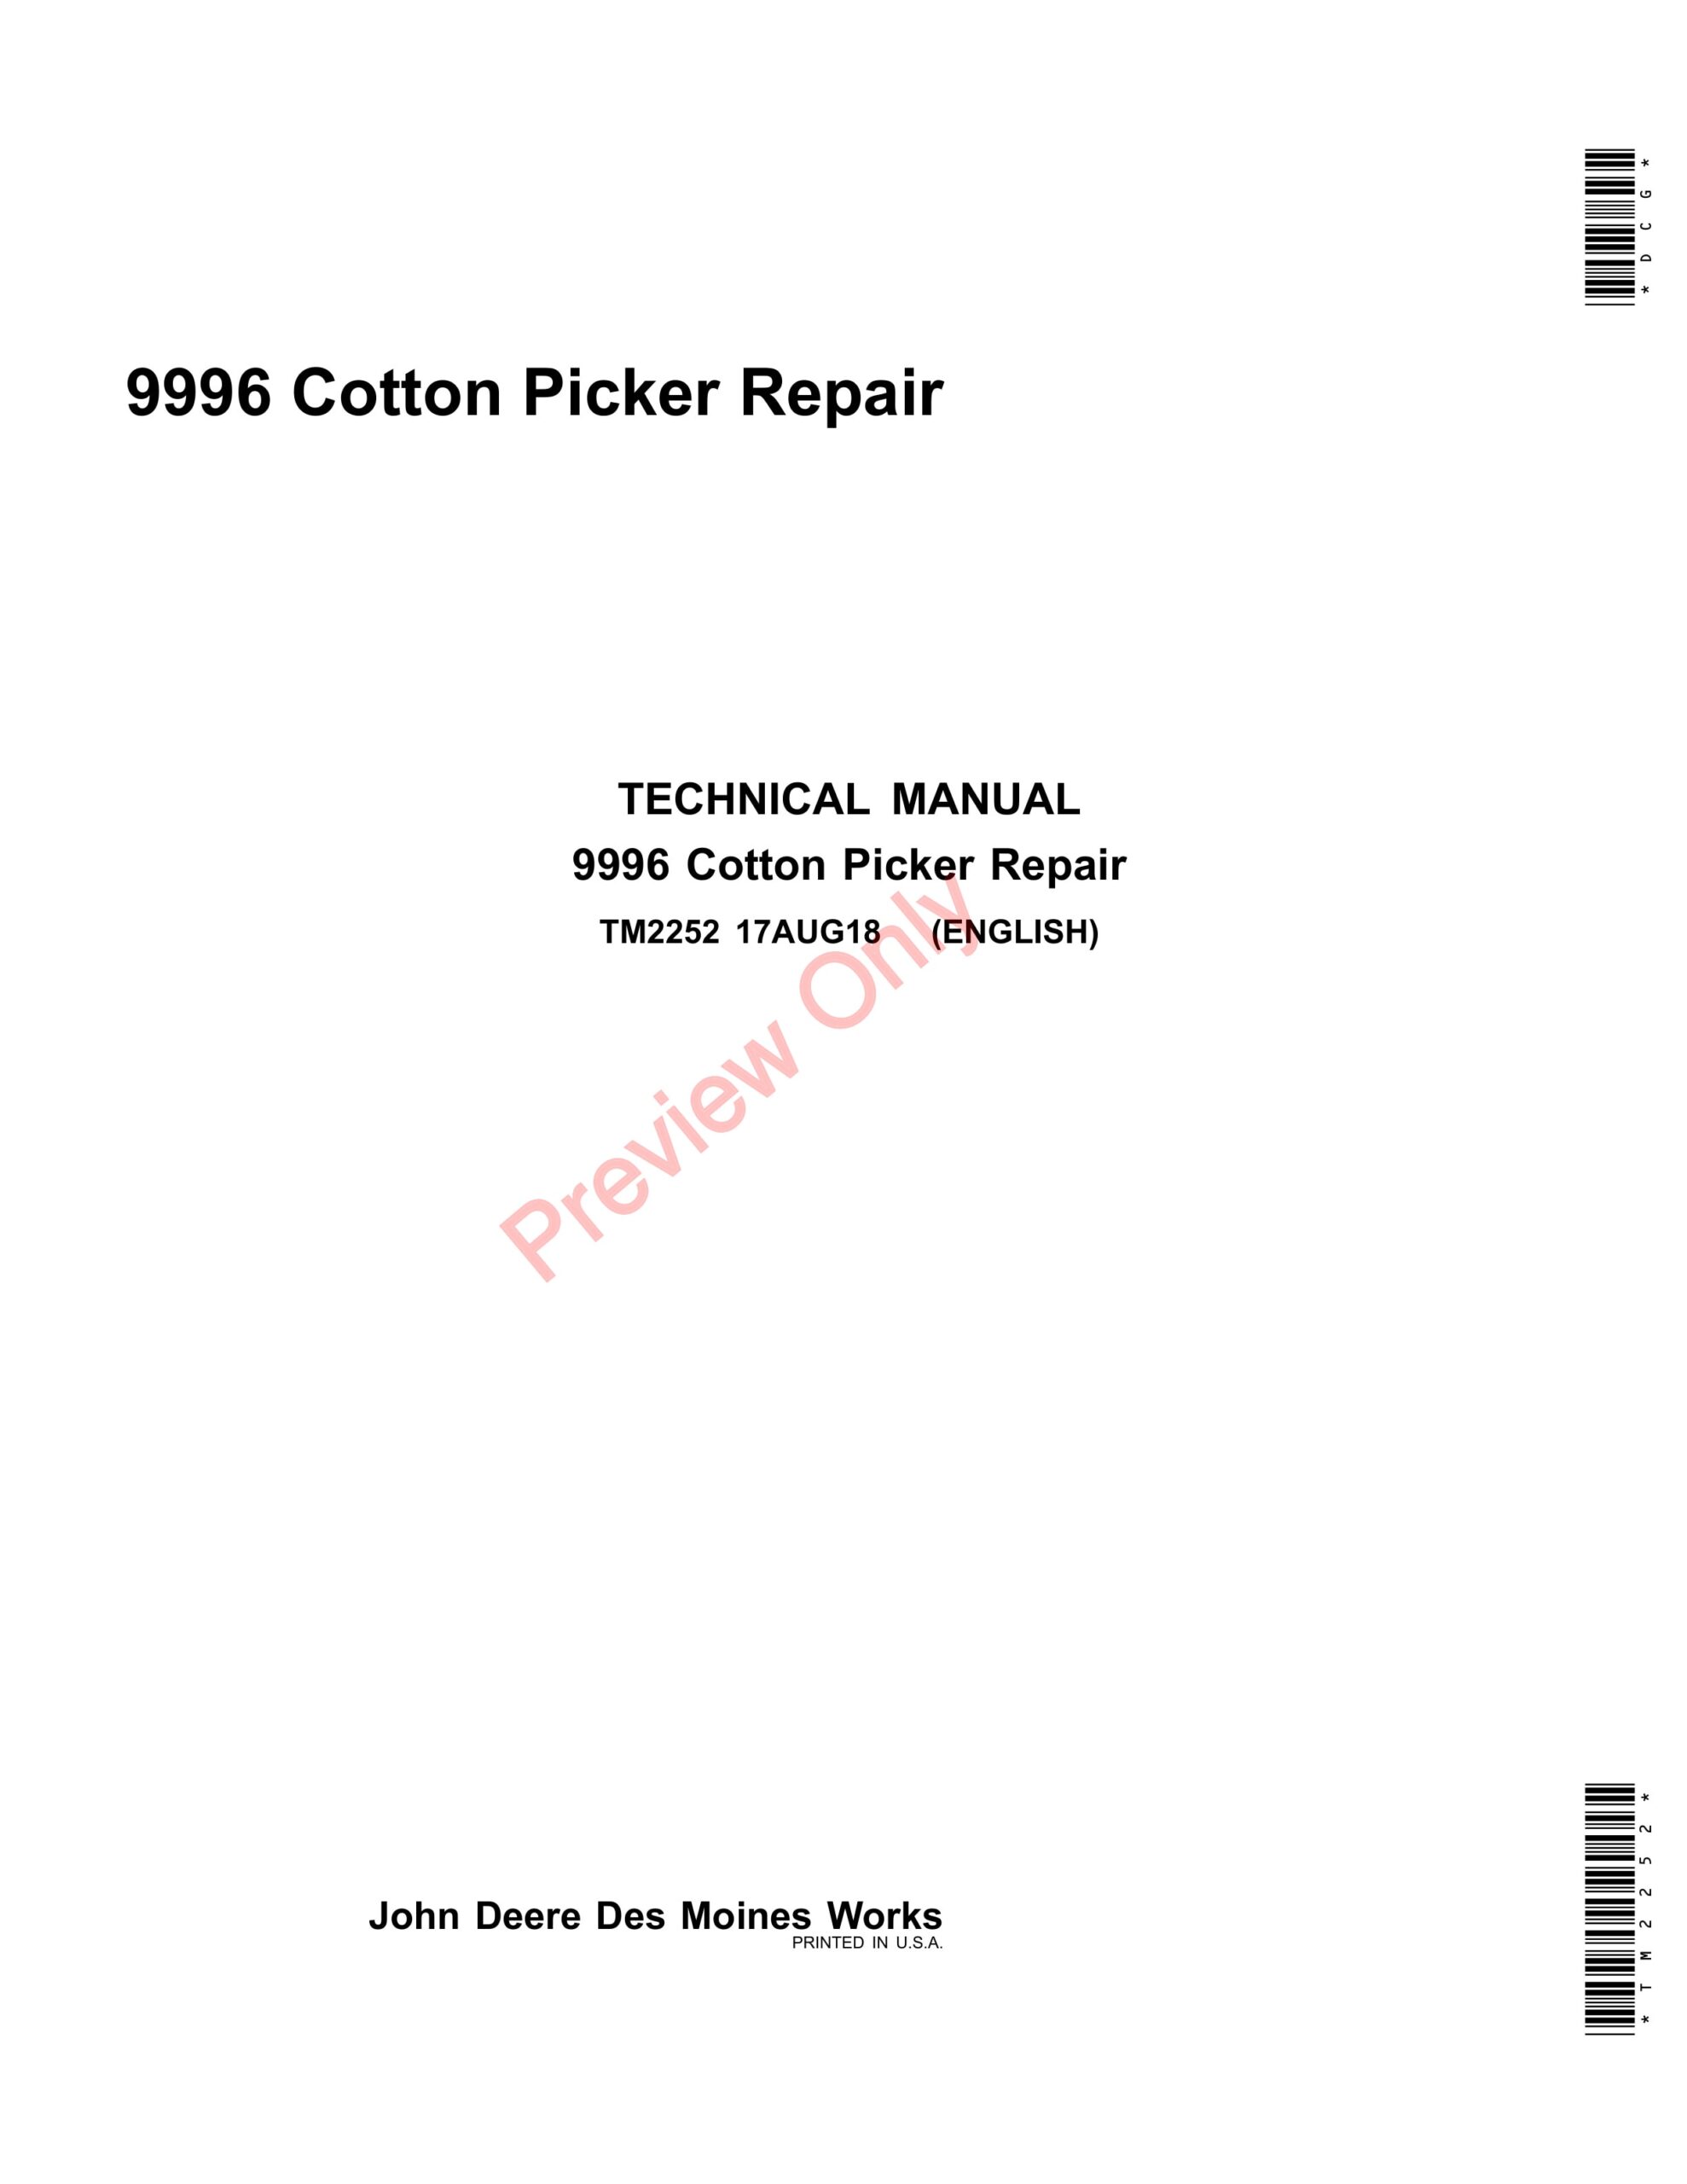 John Deere 9996 Cotton Picker Technical Manual TM2252 17AUG18-1